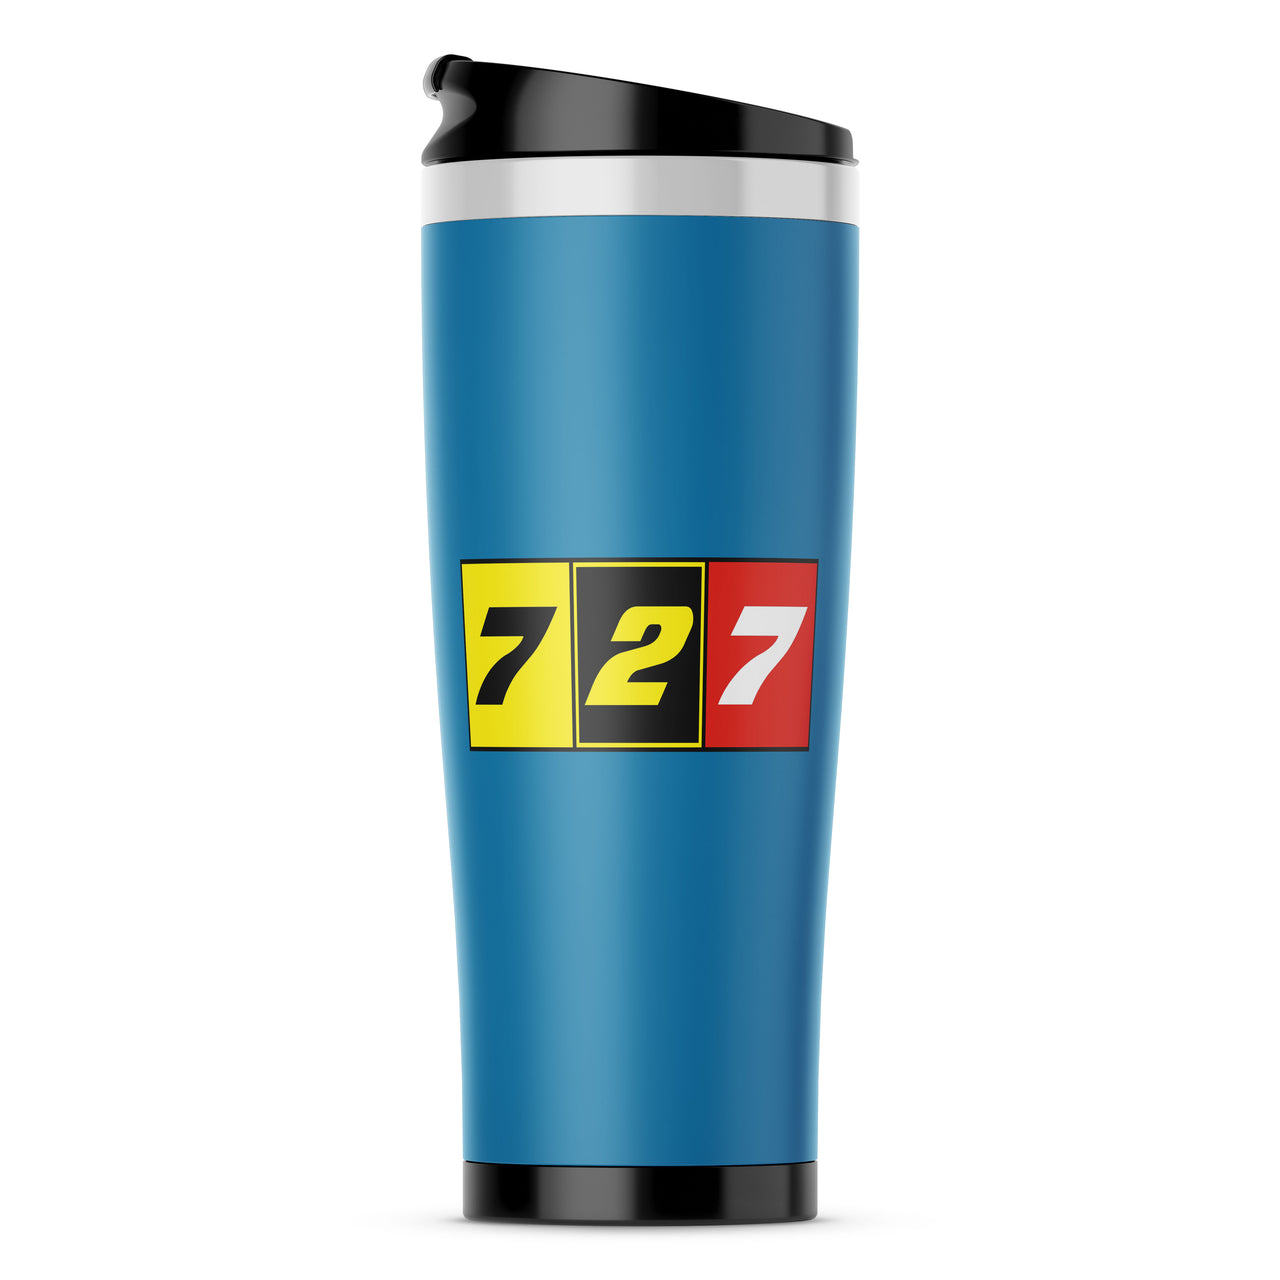 Flat Colourful 727 Designed Travel Mugs